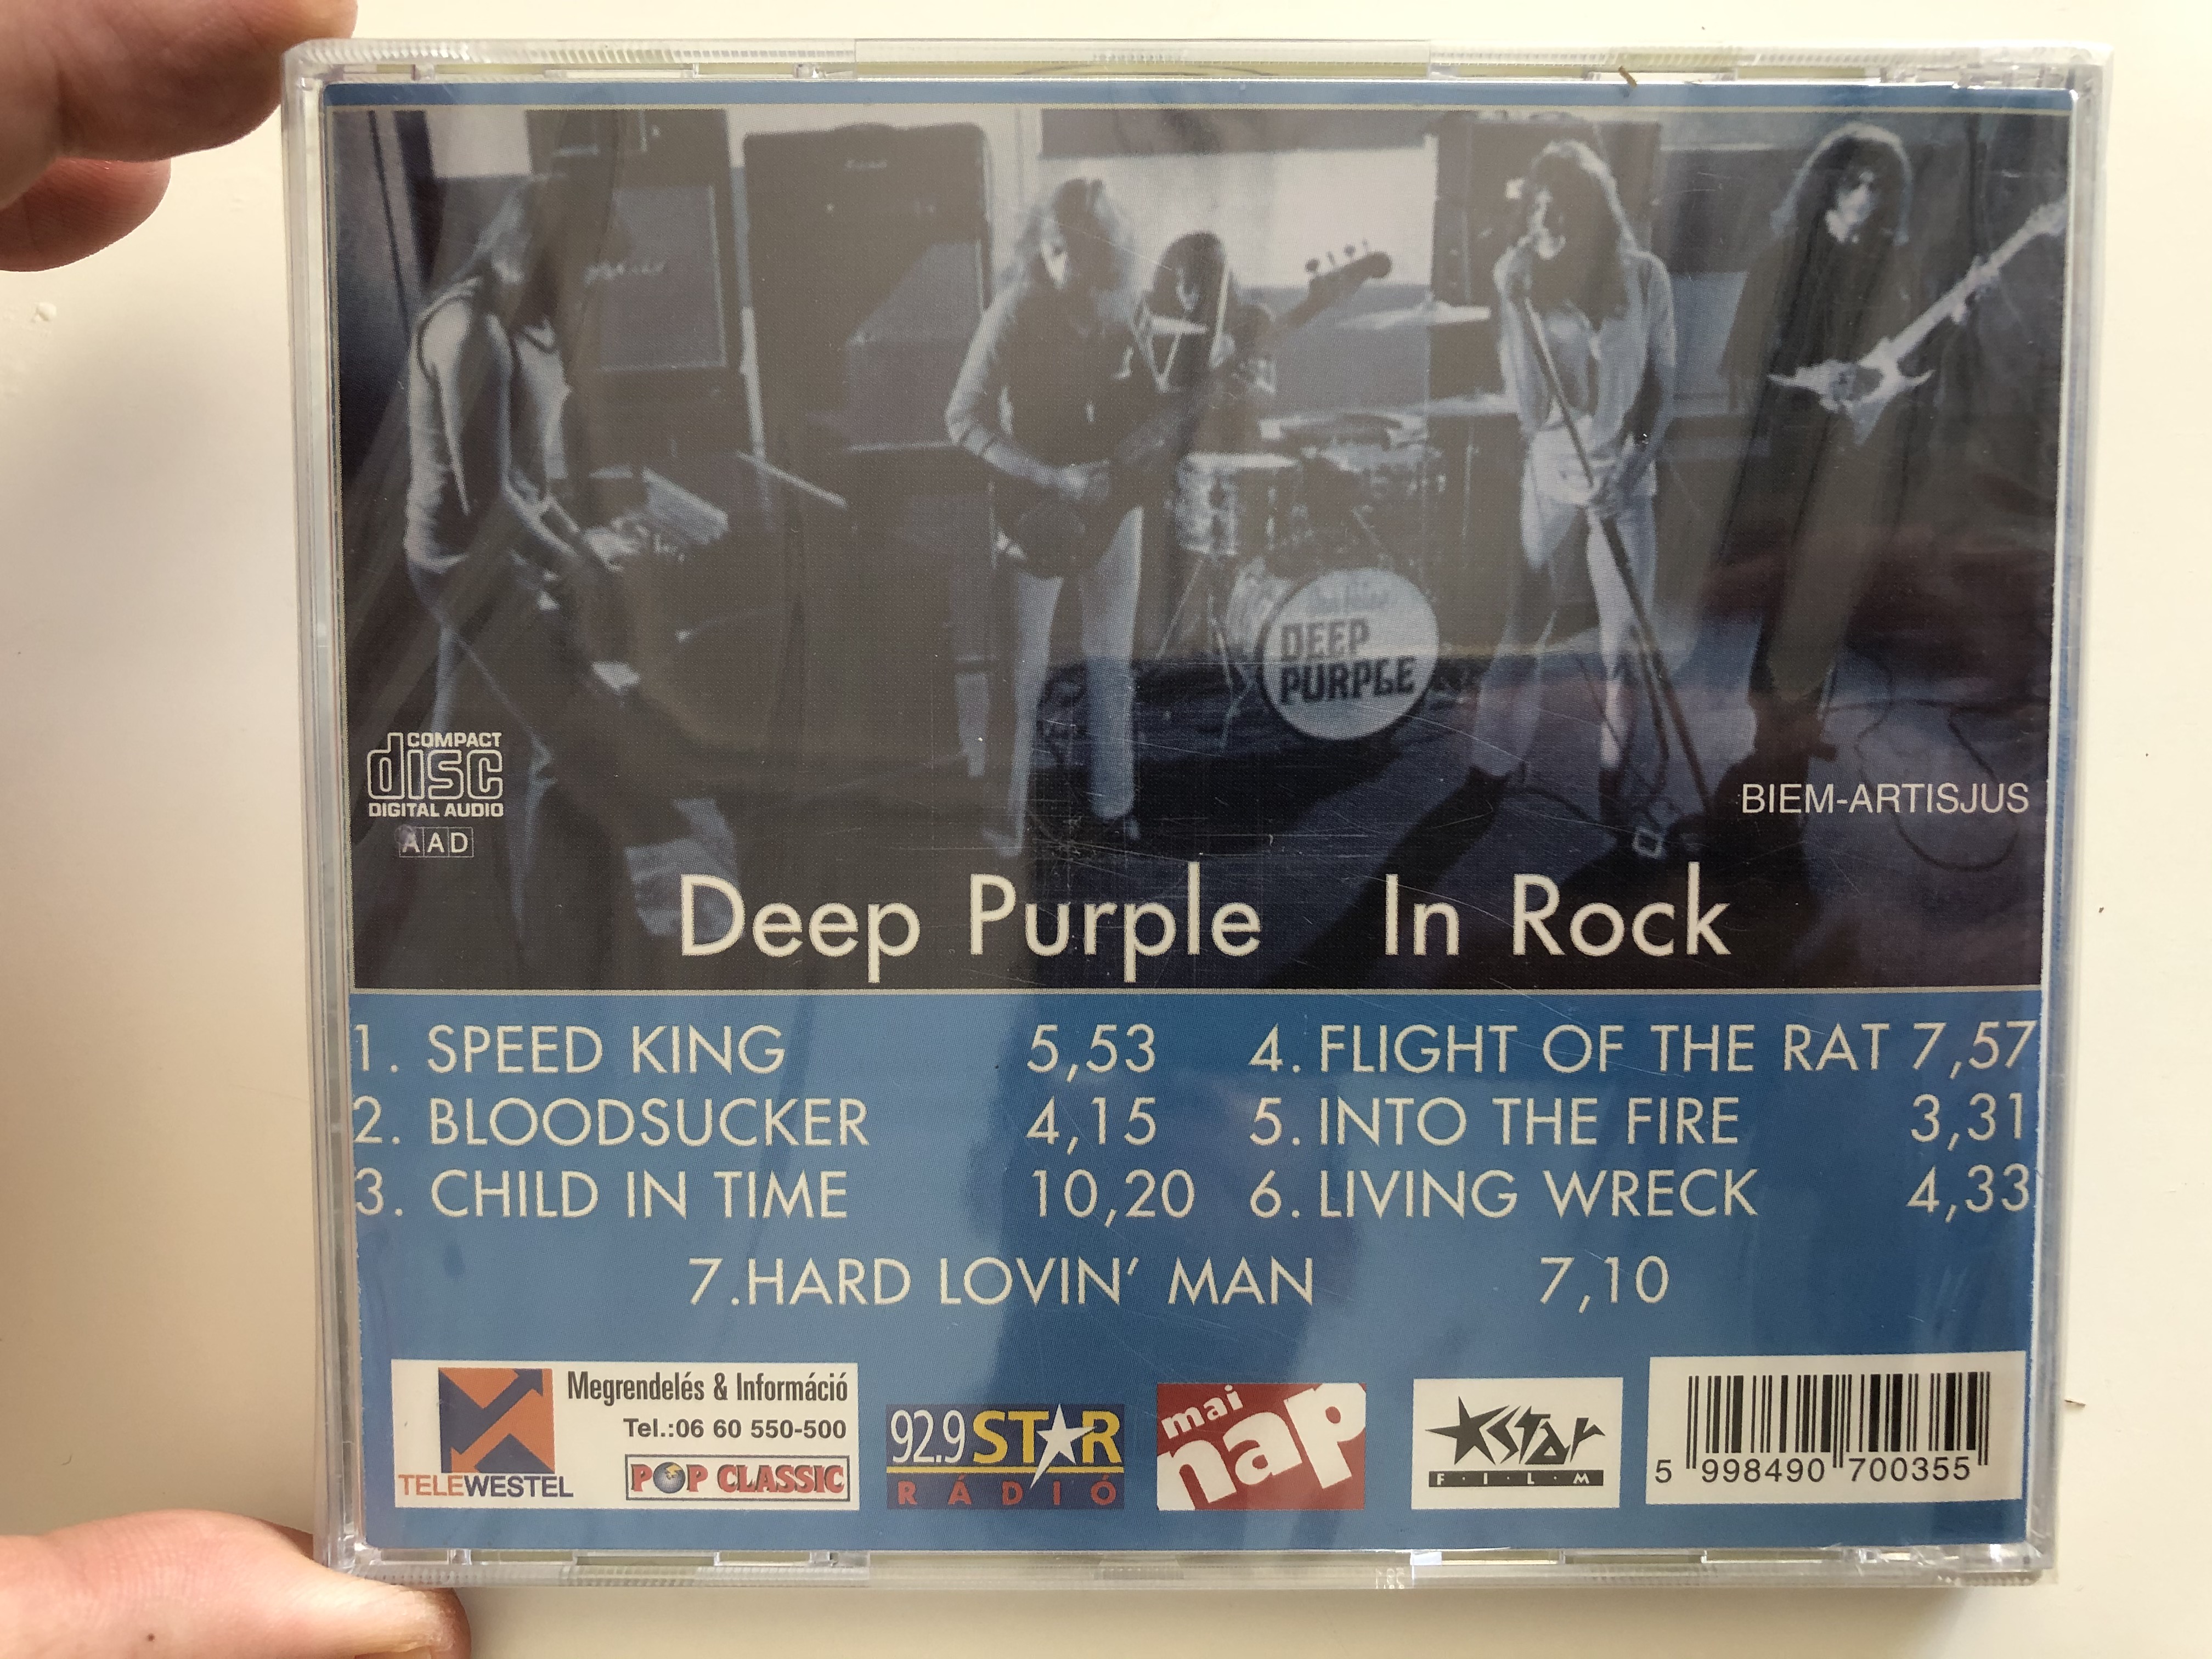 deep-purple-in-rock-pop-classic-euroton-audio-cd-eucd-0035-2-.jpg